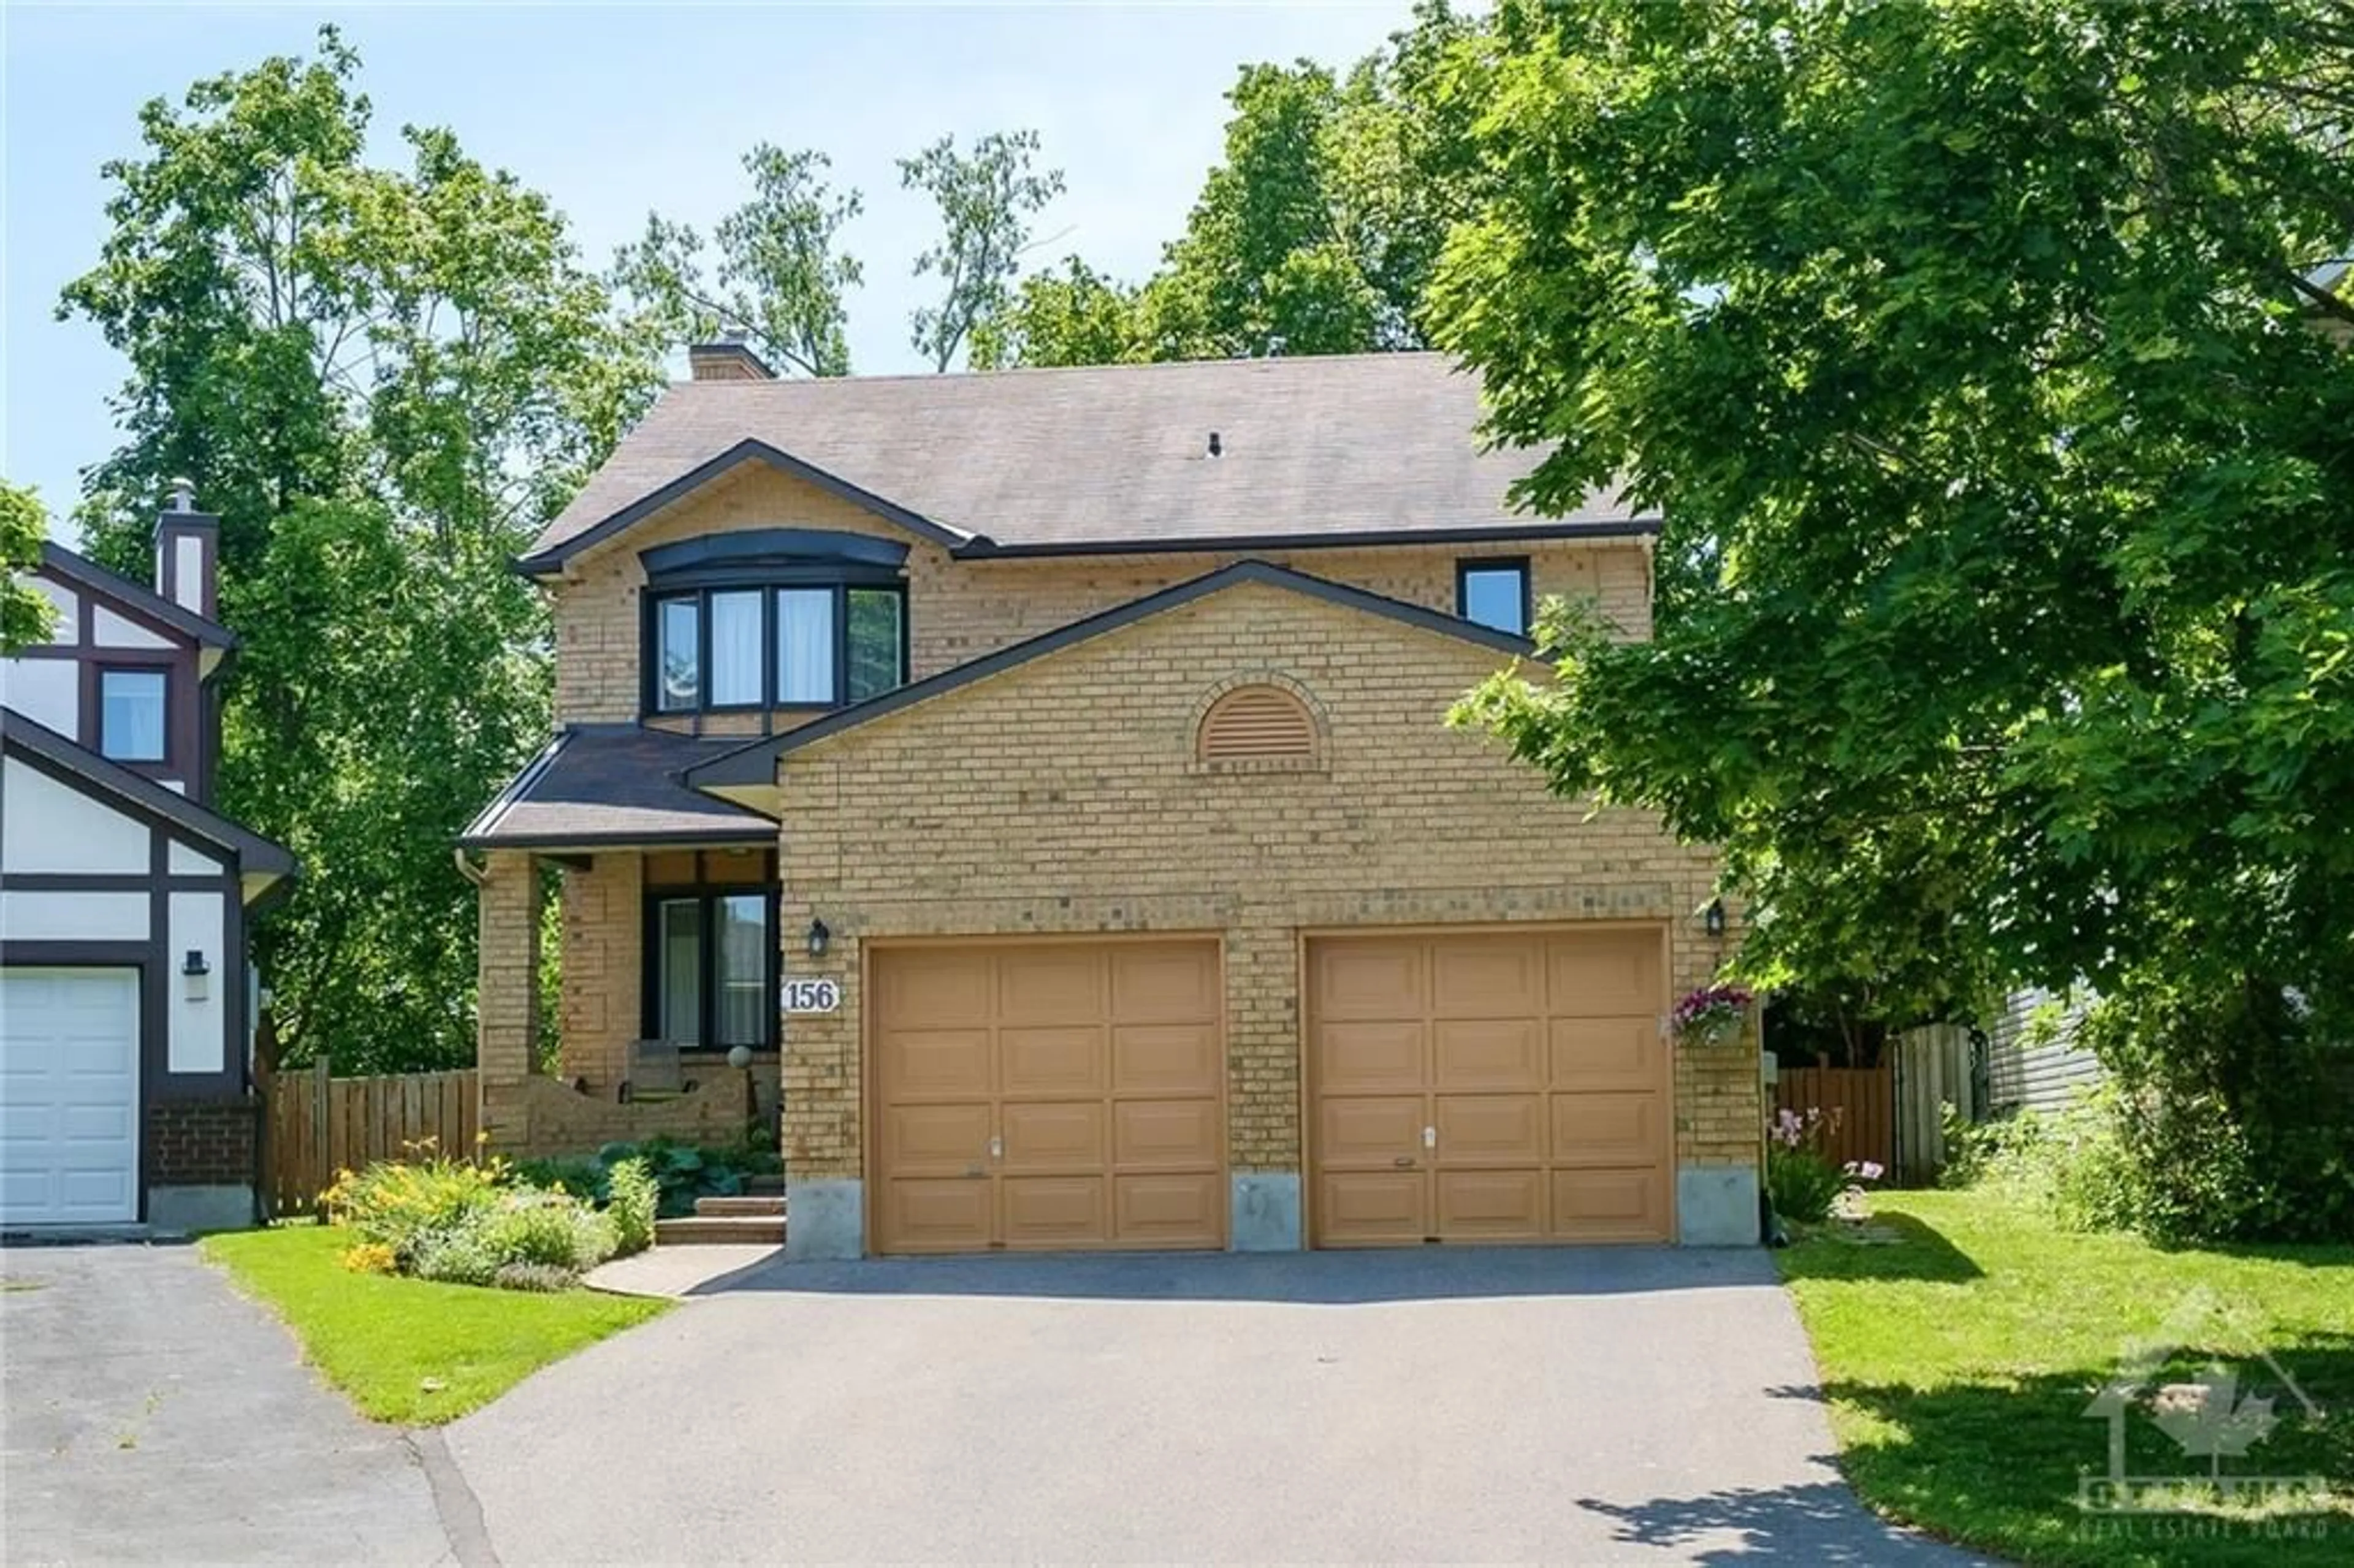 Home with brick exterior material for 156 TWYFORD St, Ottawa Ontario K1V 0V7